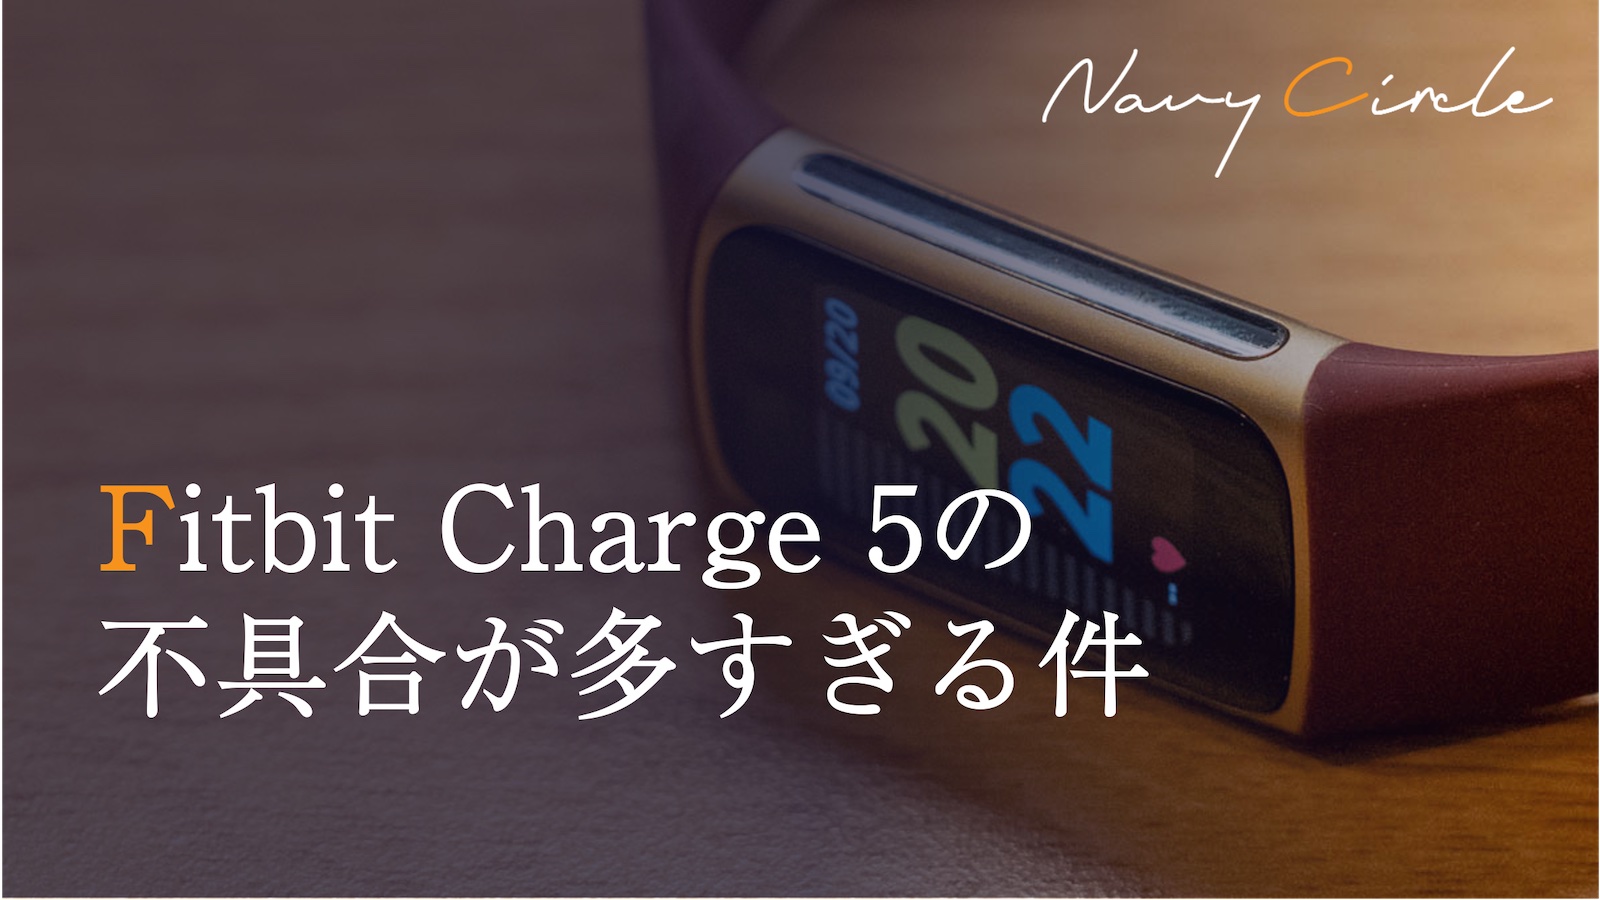 Fitbit Charge 5の不具合が多すぎる件 | Navy Circle